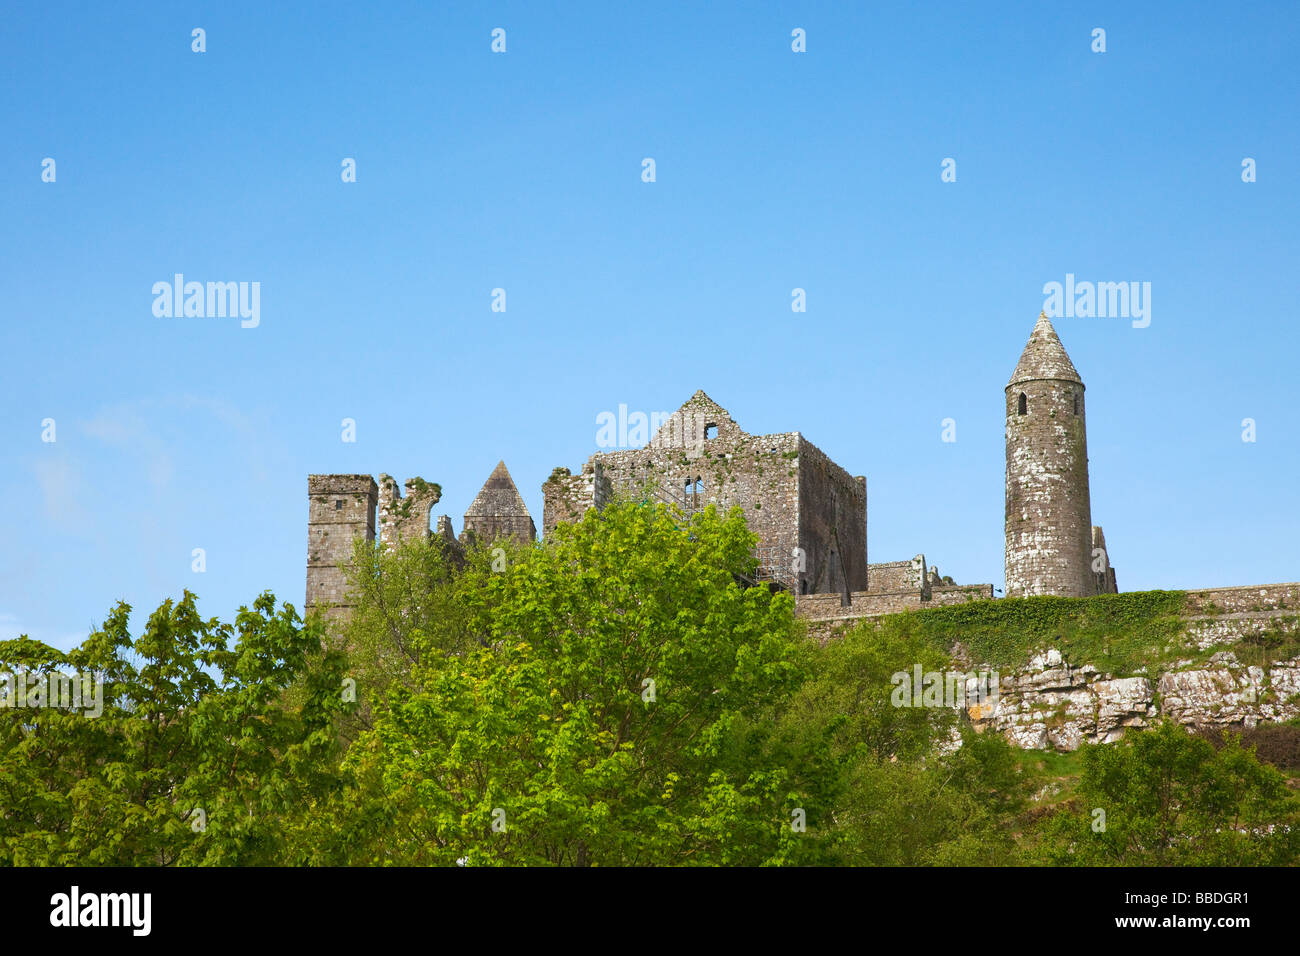 Rock of Cashel Grafschaft Co Tipperary Irland Irland Irland Europa EU Stockfoto